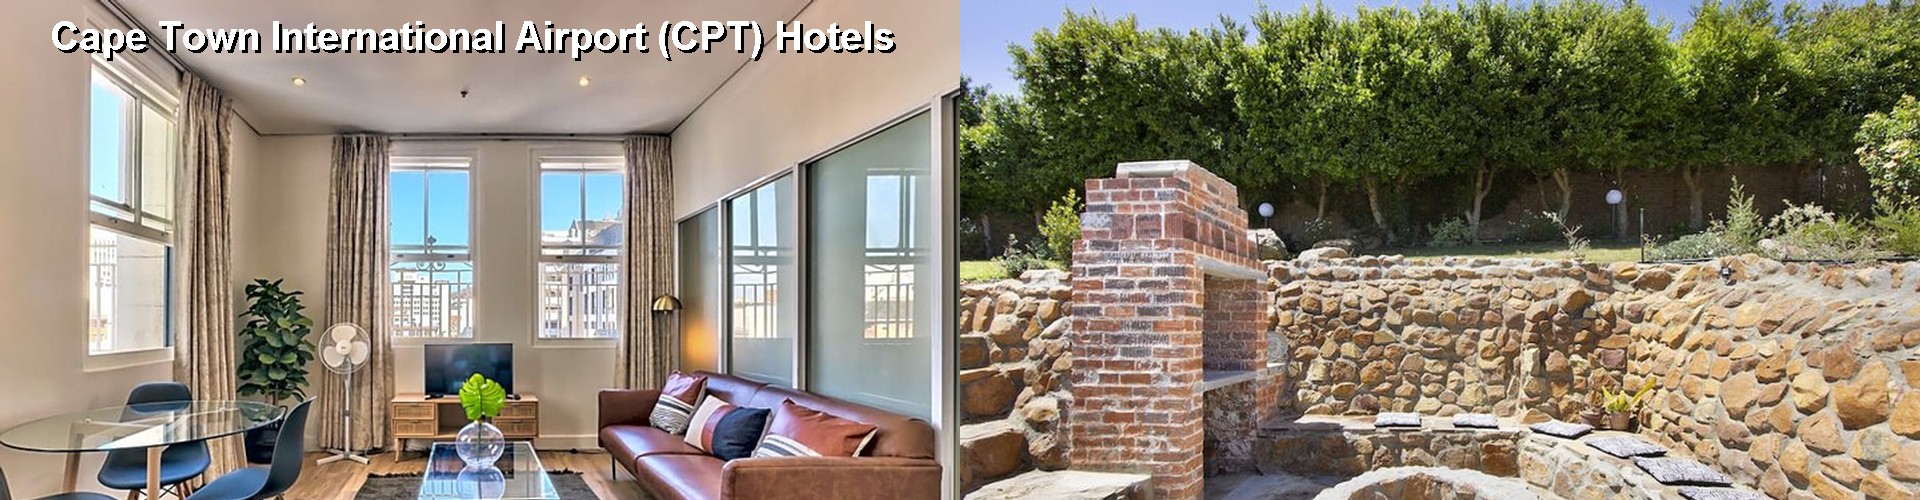 4 Best Hotels near Cape Town International Airport (CPT)